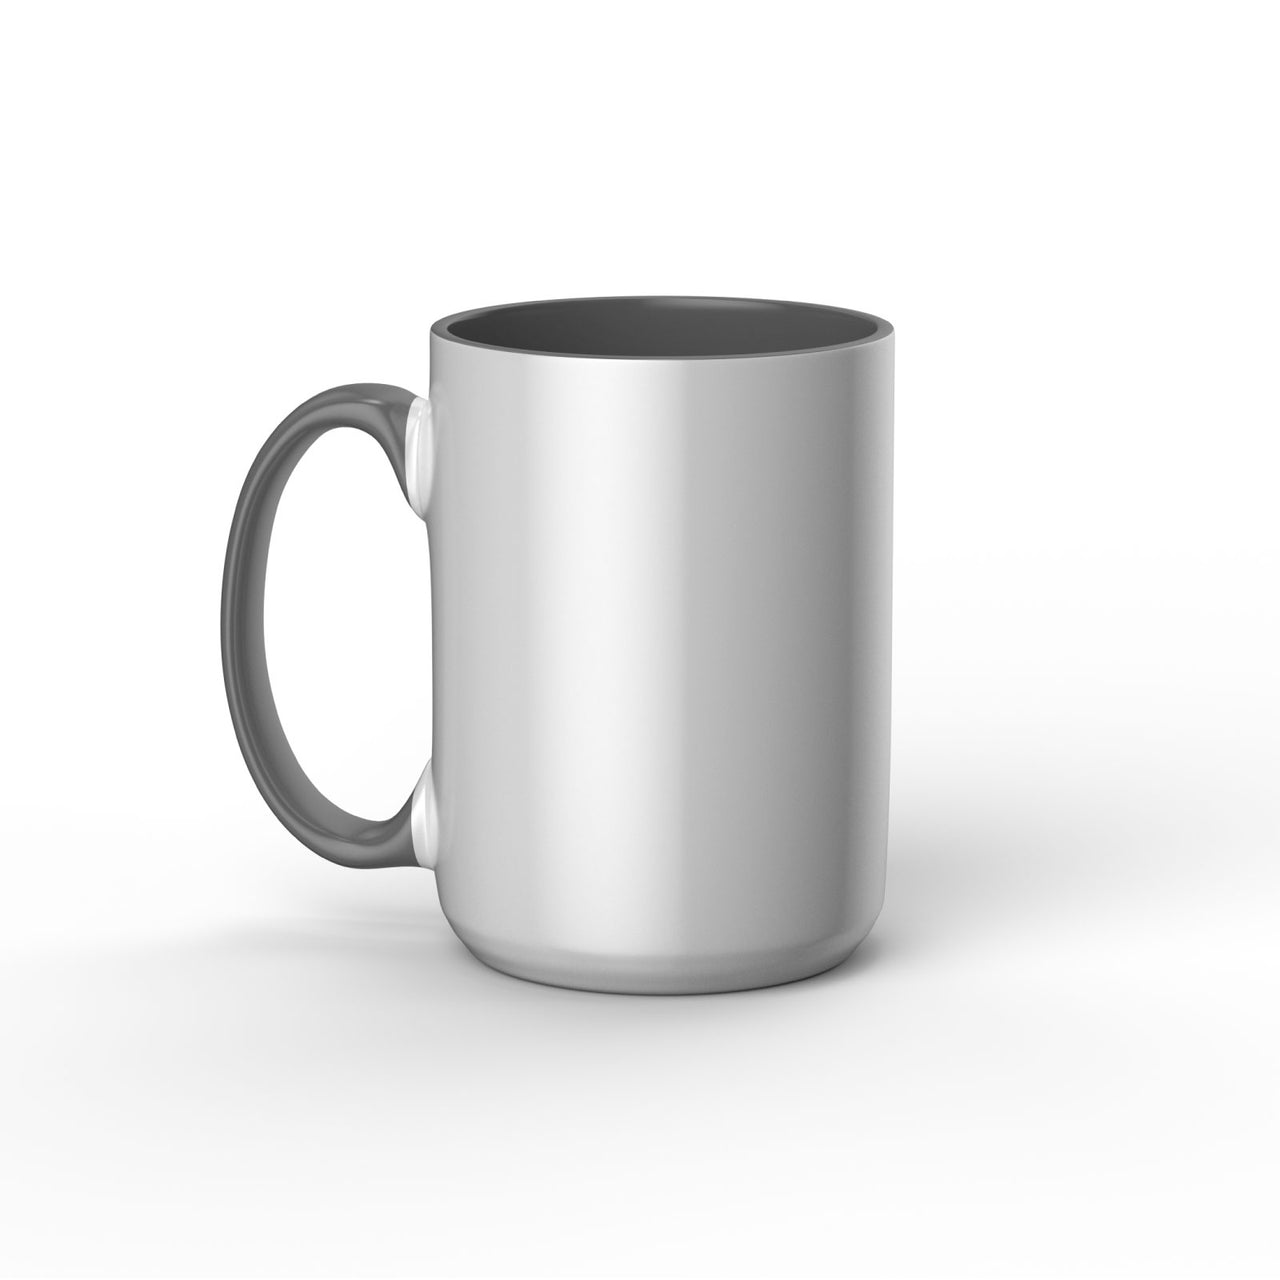 Cricut Beveled Ceramic Mug Blank - 15 oz/425 ml 1 ct